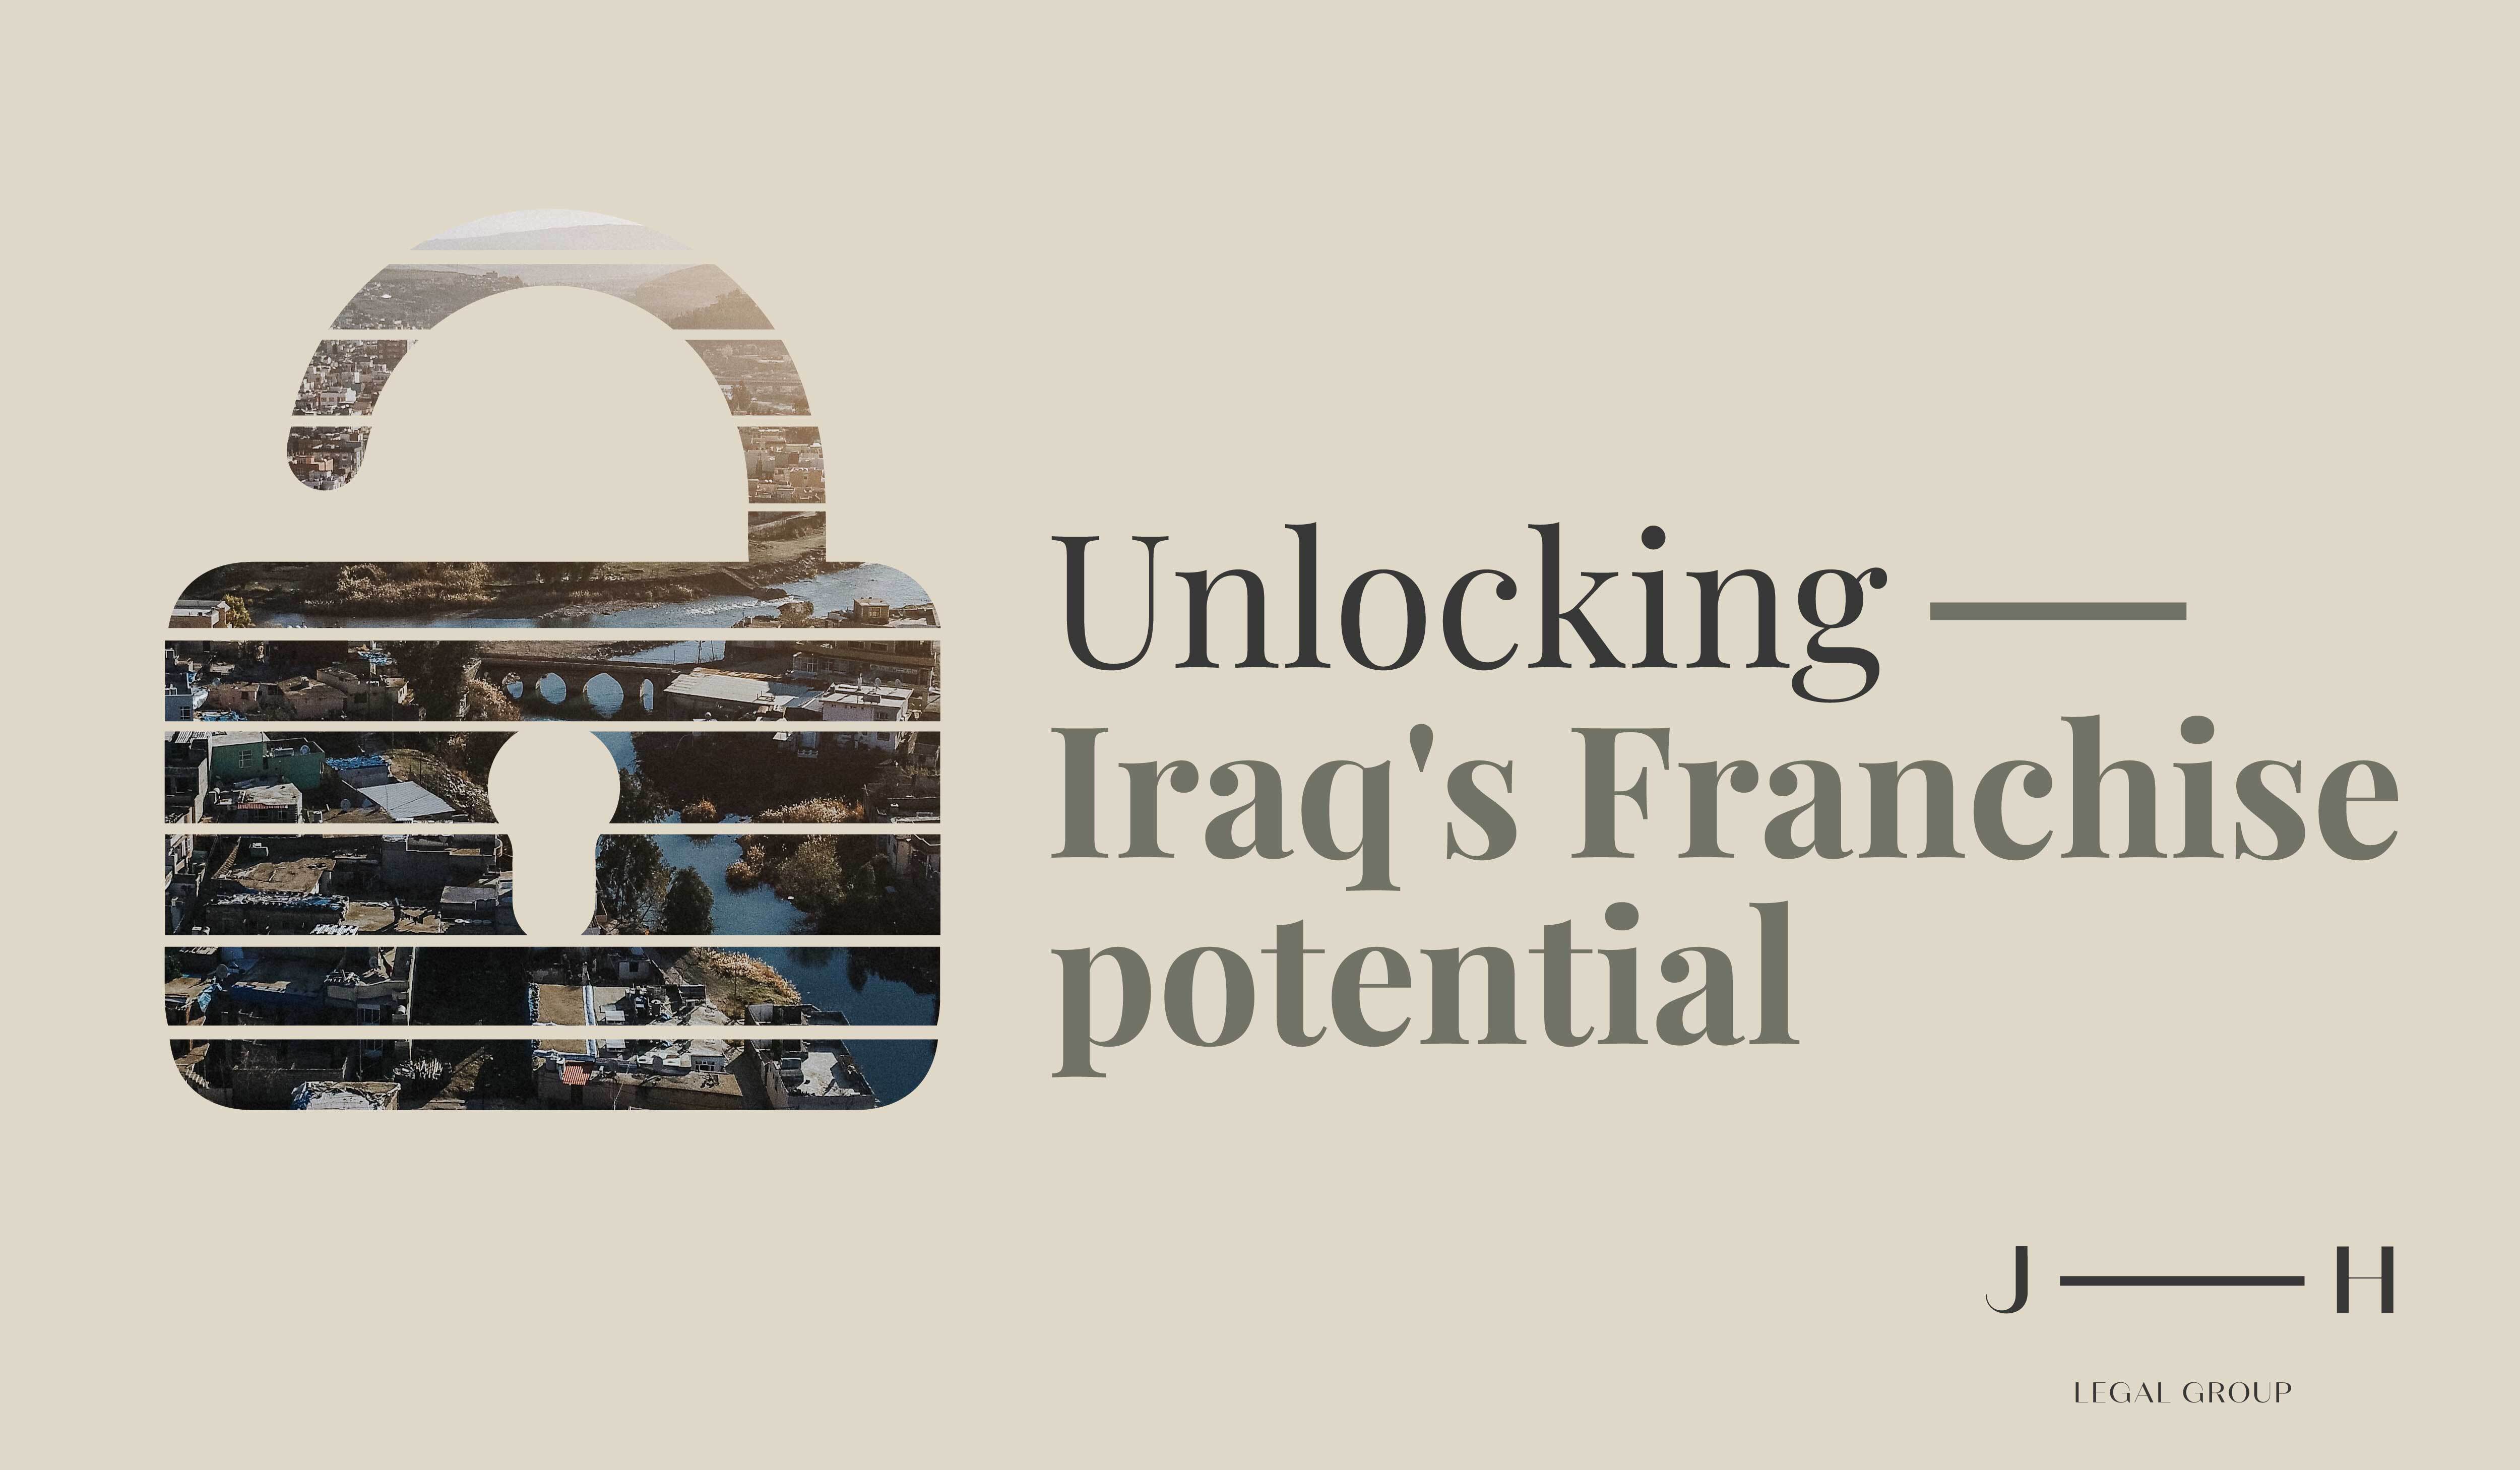 Iraq franchise potentials